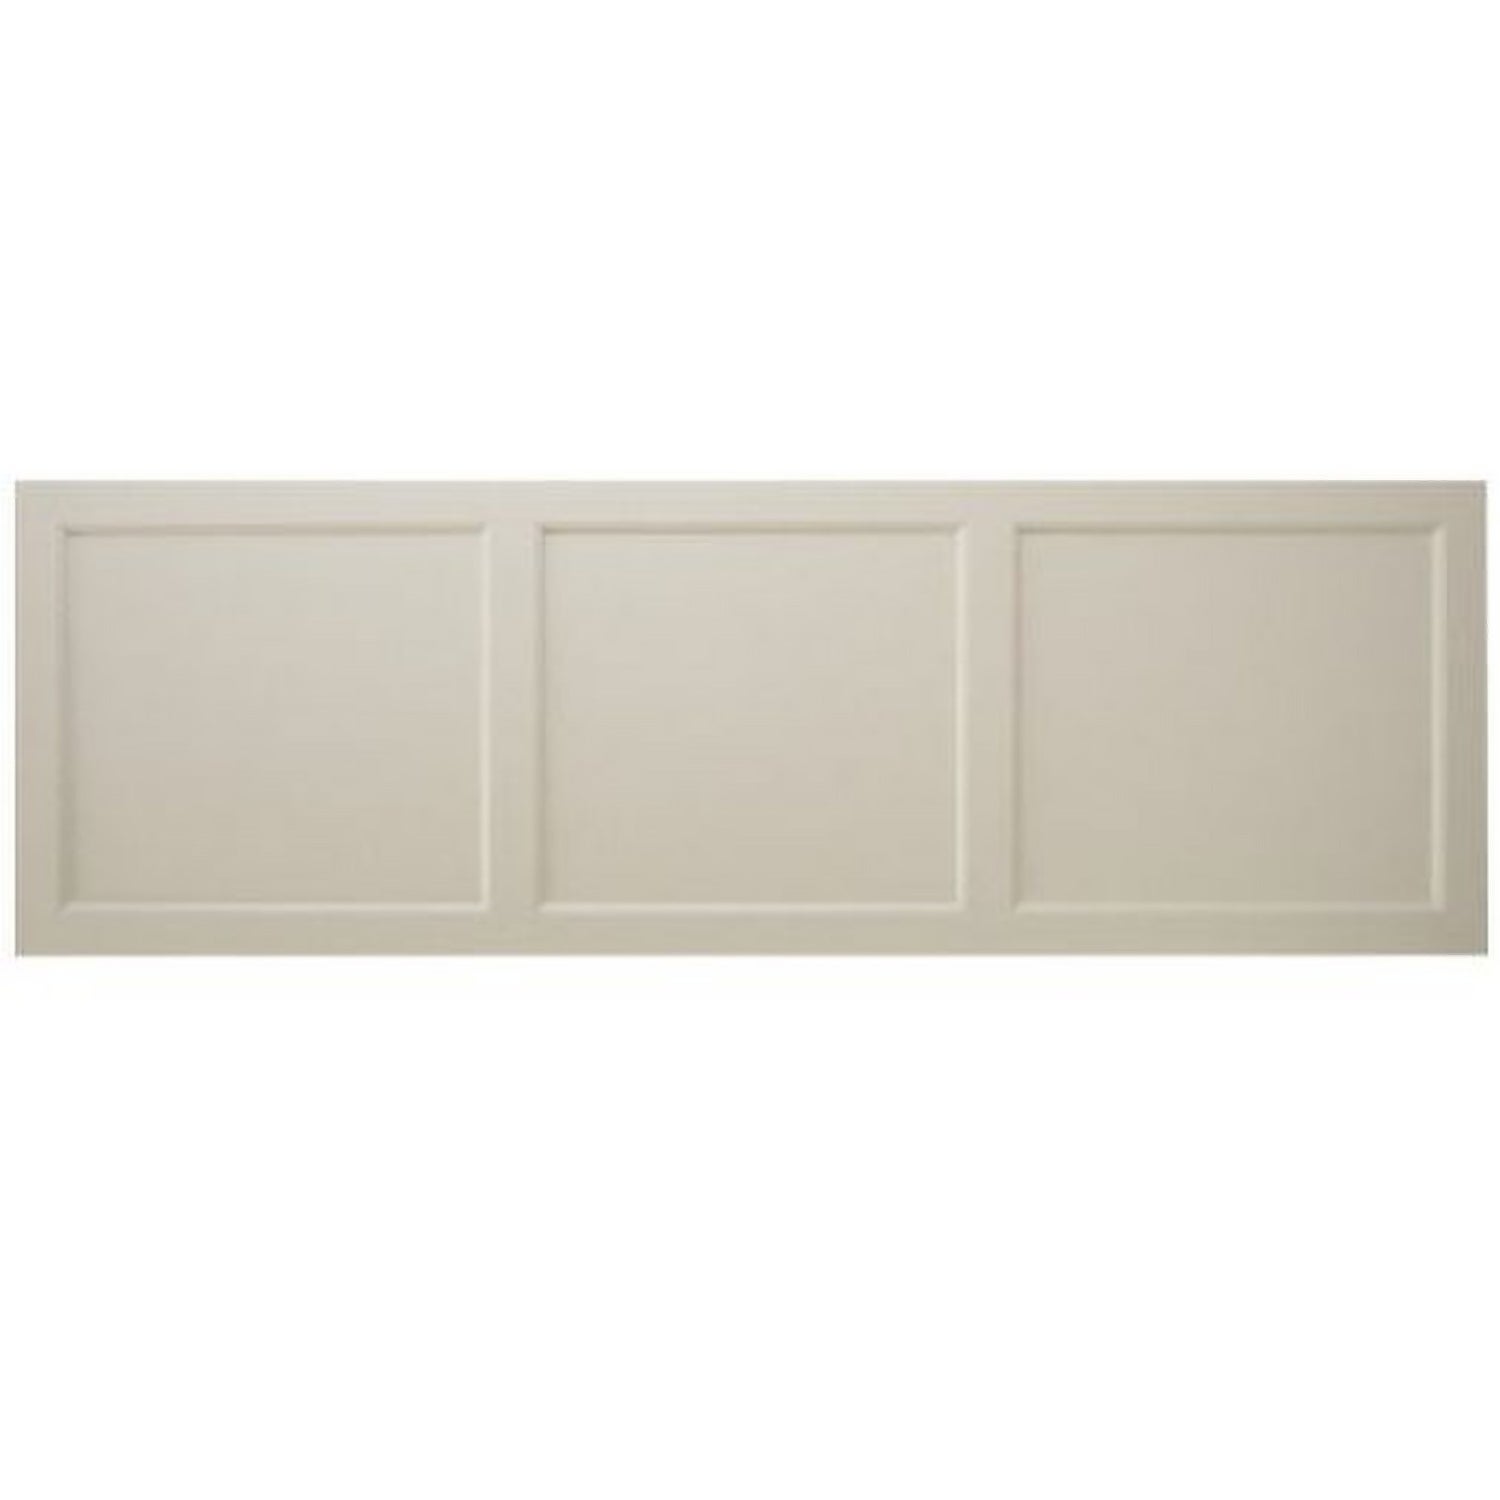 Savoy Bath Side Panel 1800mm - Old English White